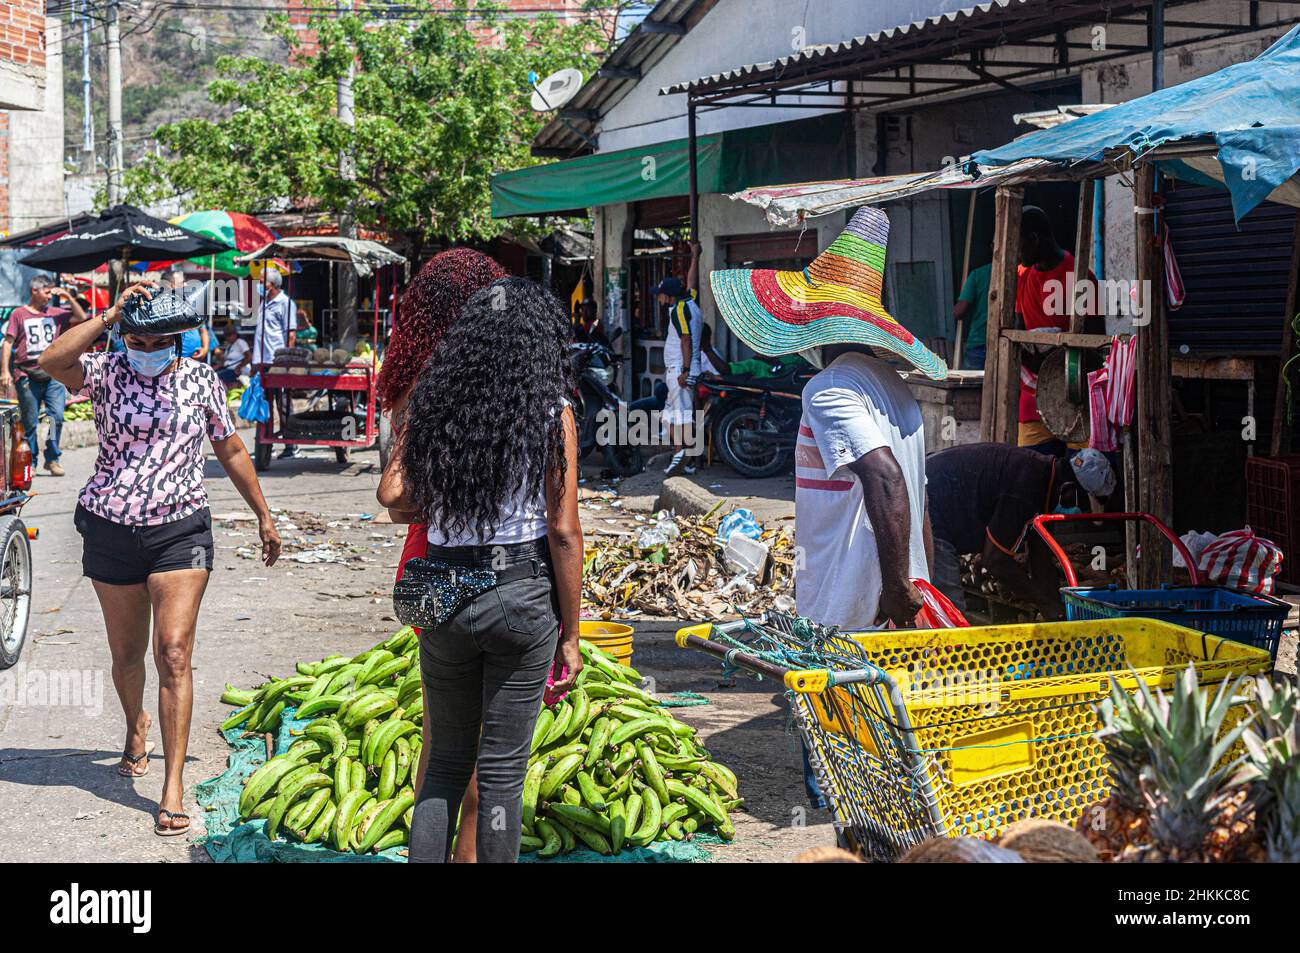 Street scene on public market Mercado Bazurto, Cartagena de Indias, Colombia. Stock Photo